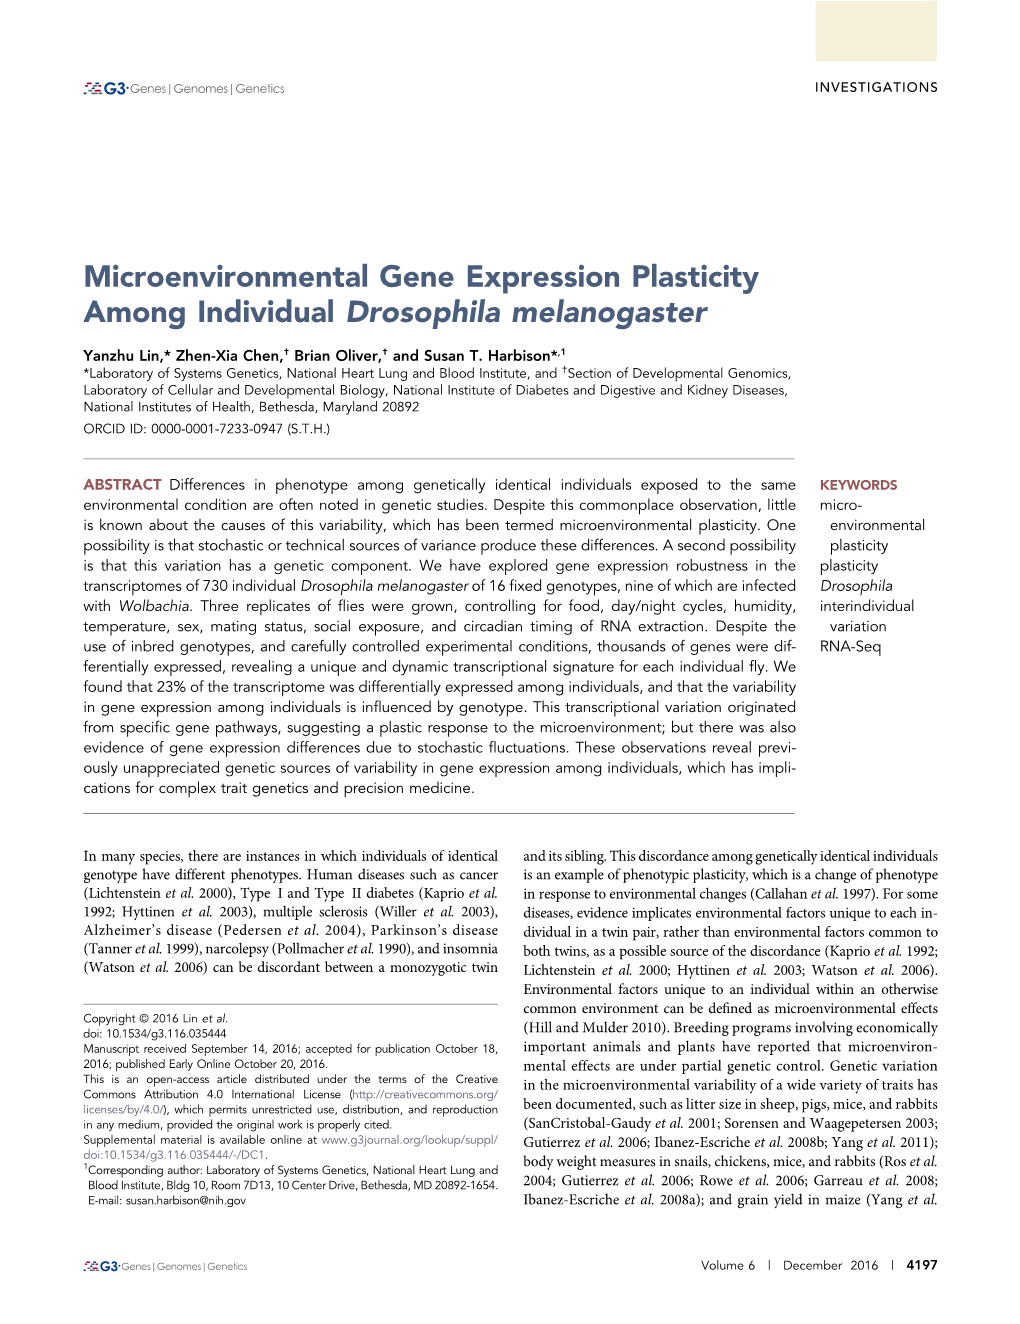 Microenvironmental Gene Expression Plasticity Among Individual Drosophila Melanogaster